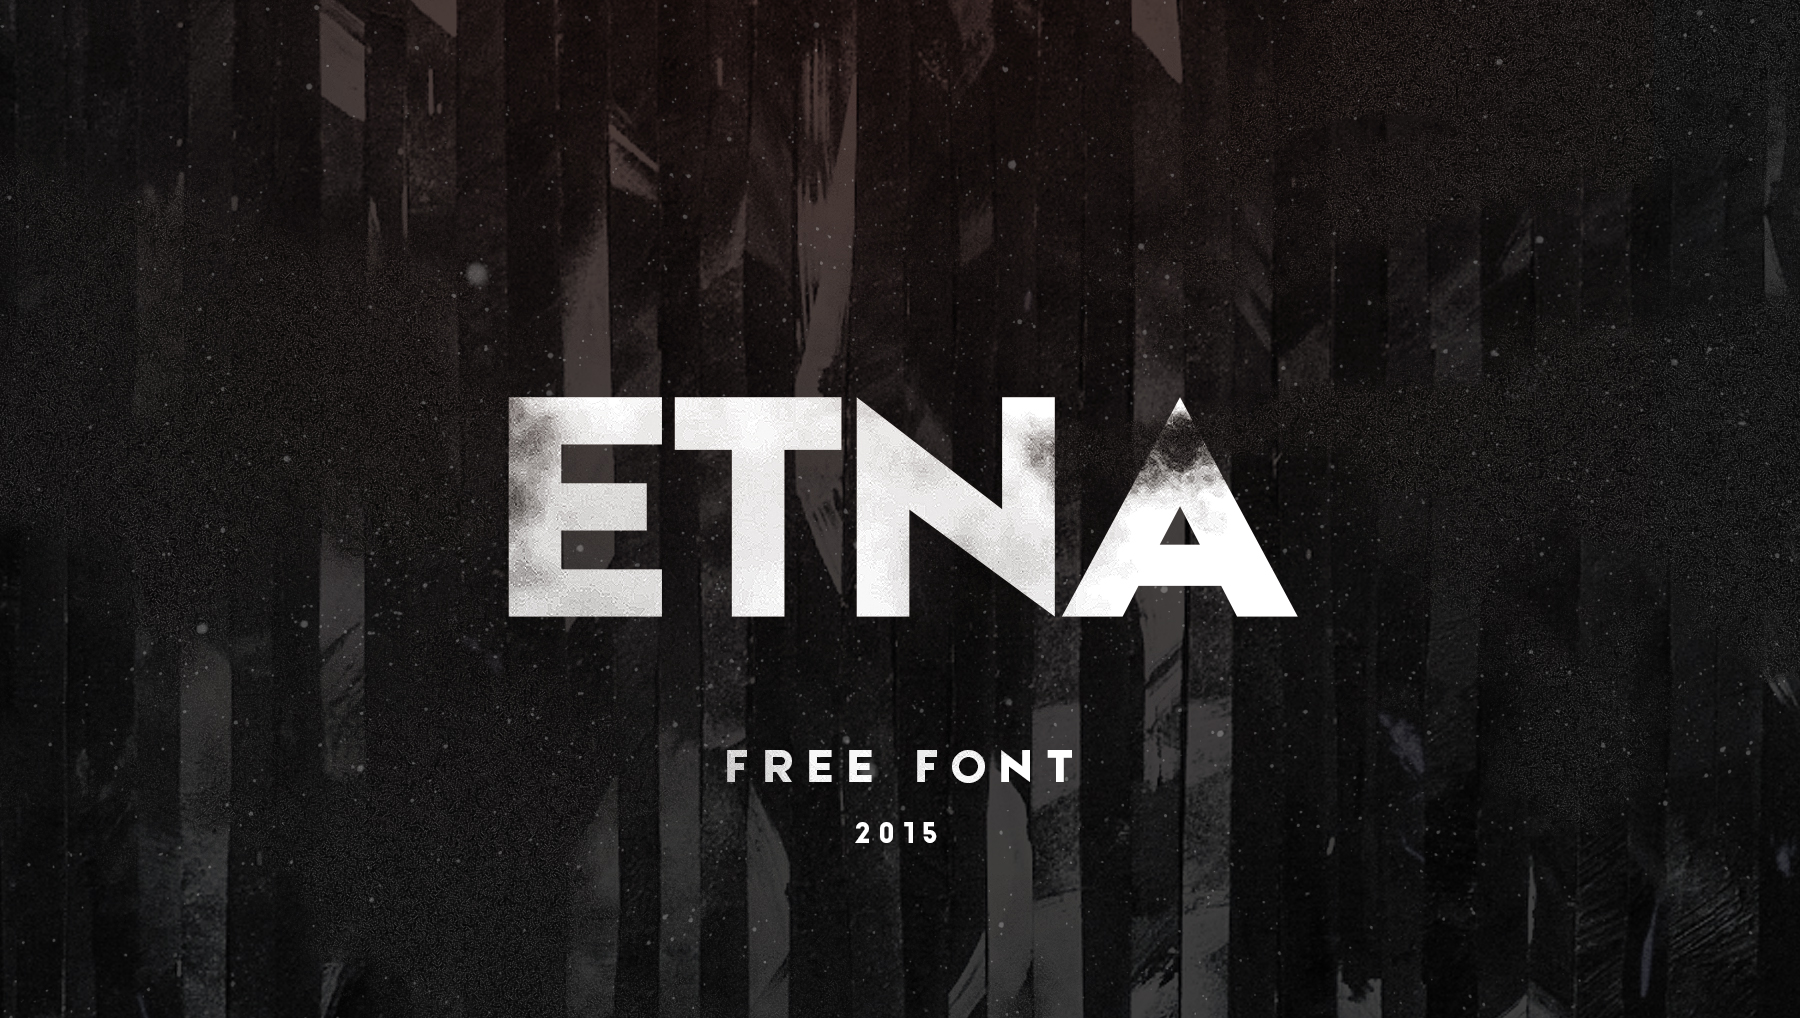 ETNA Free Font - WILDTYPE